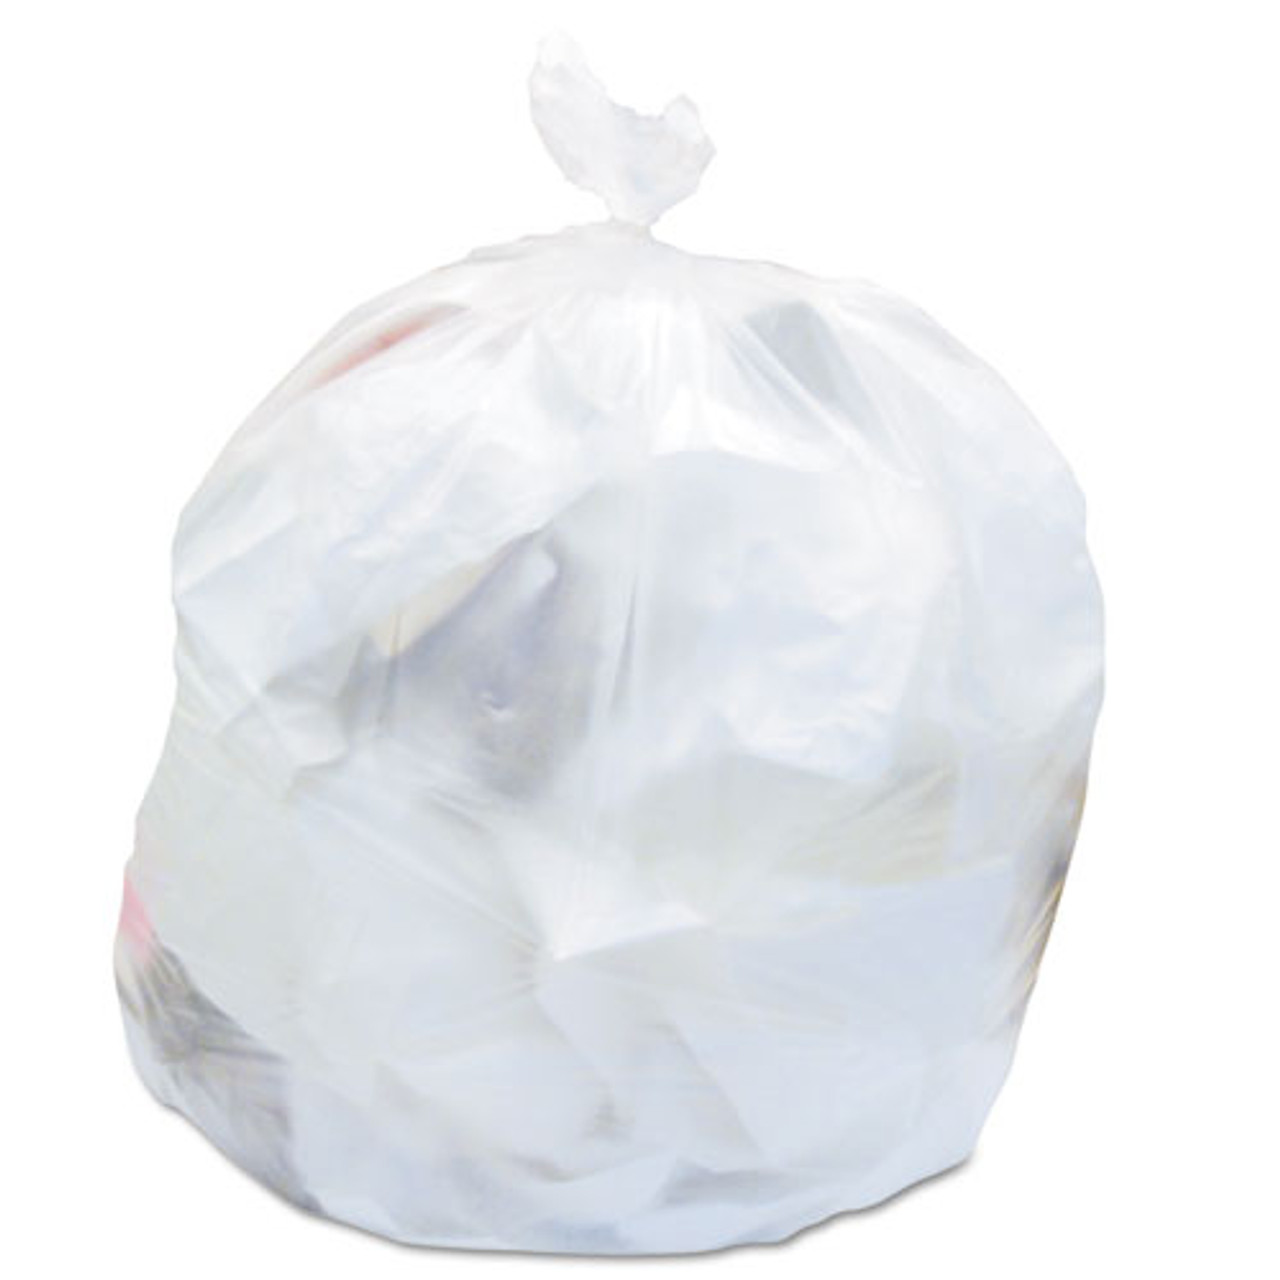 33 Gallon Natural High Density Trash Bags - 16 Micron